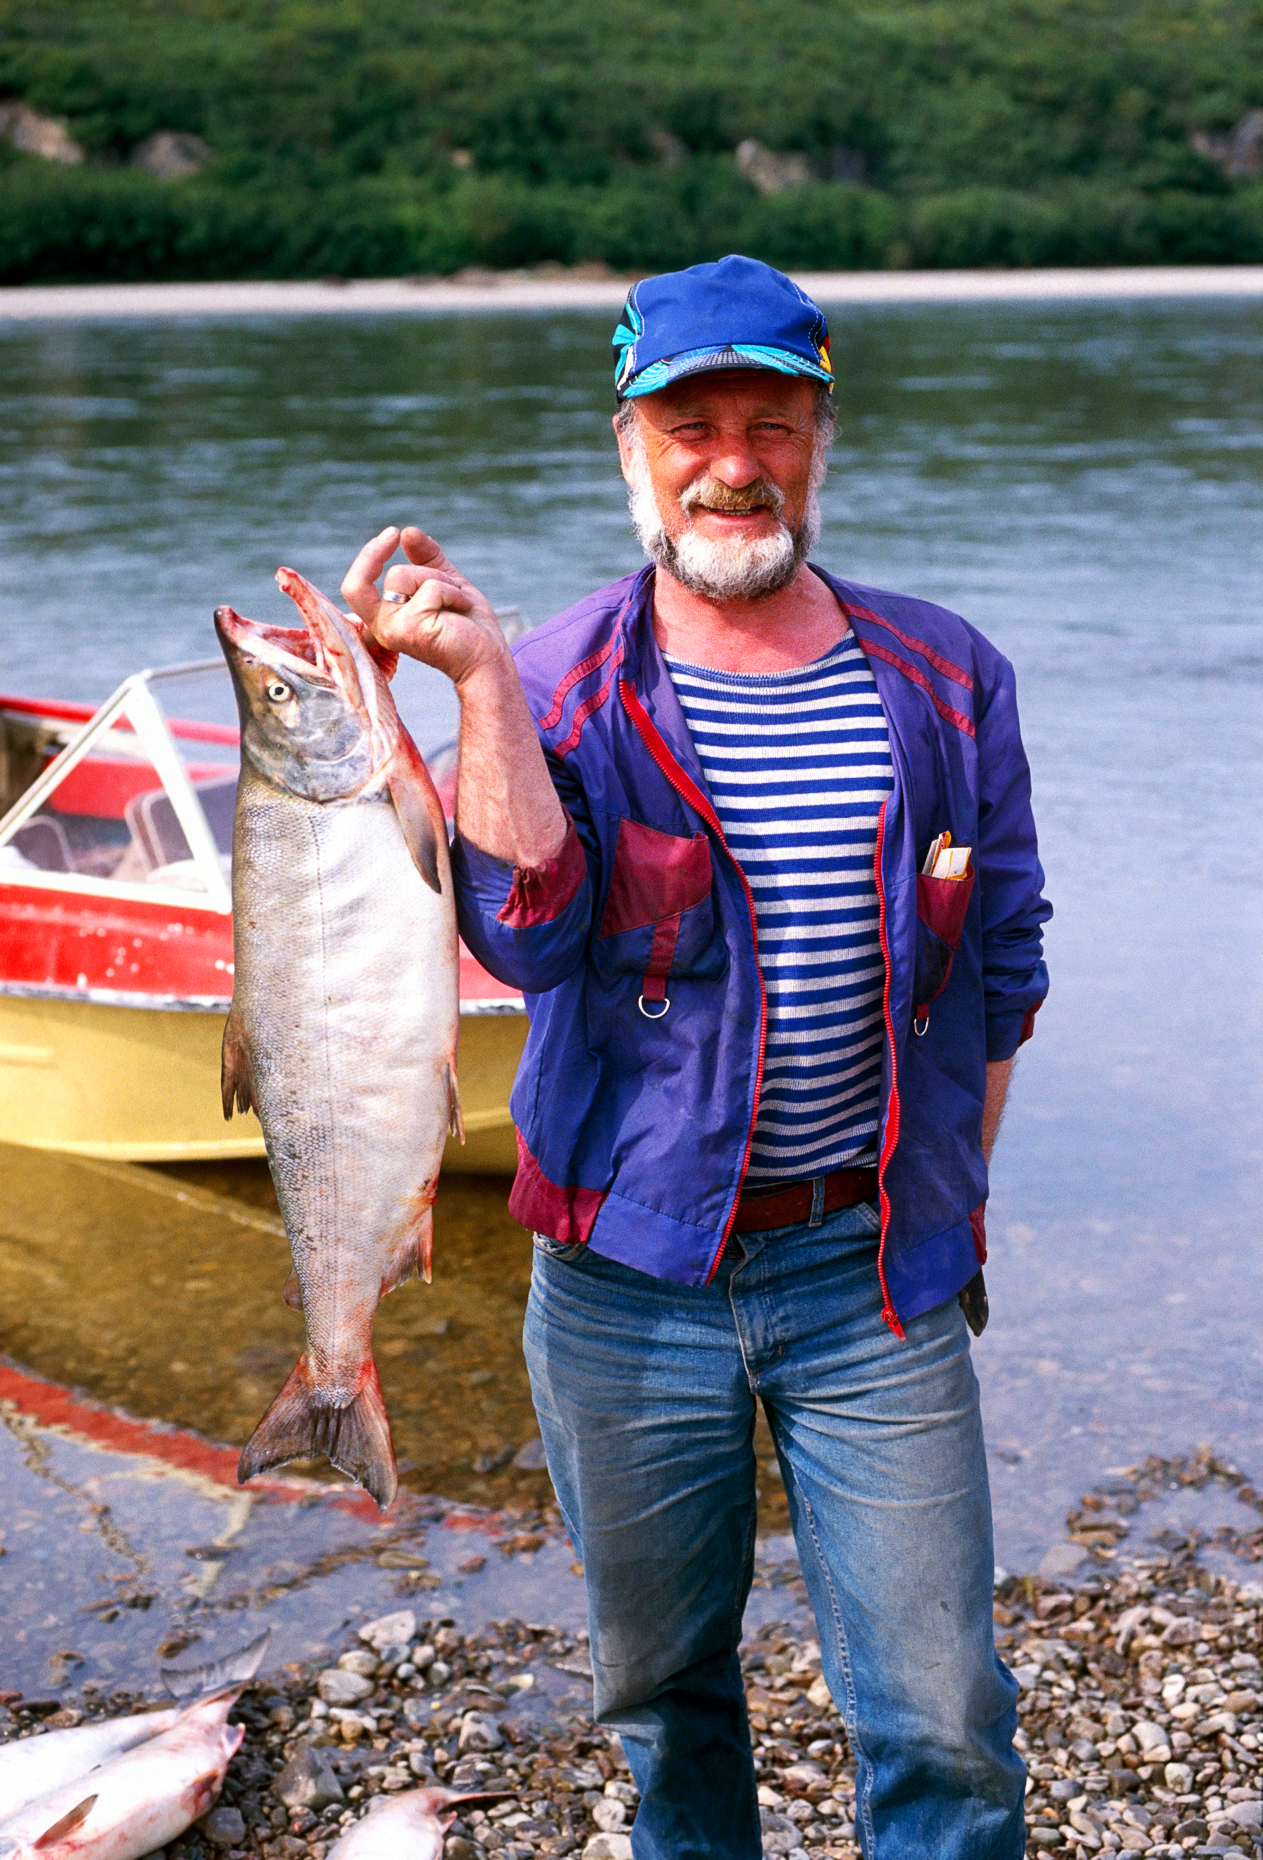 River guide holding a freshly caught salmon, Belaya River, Chukchi Peninsula, Magadon Region, Siberia, former Soviet Union